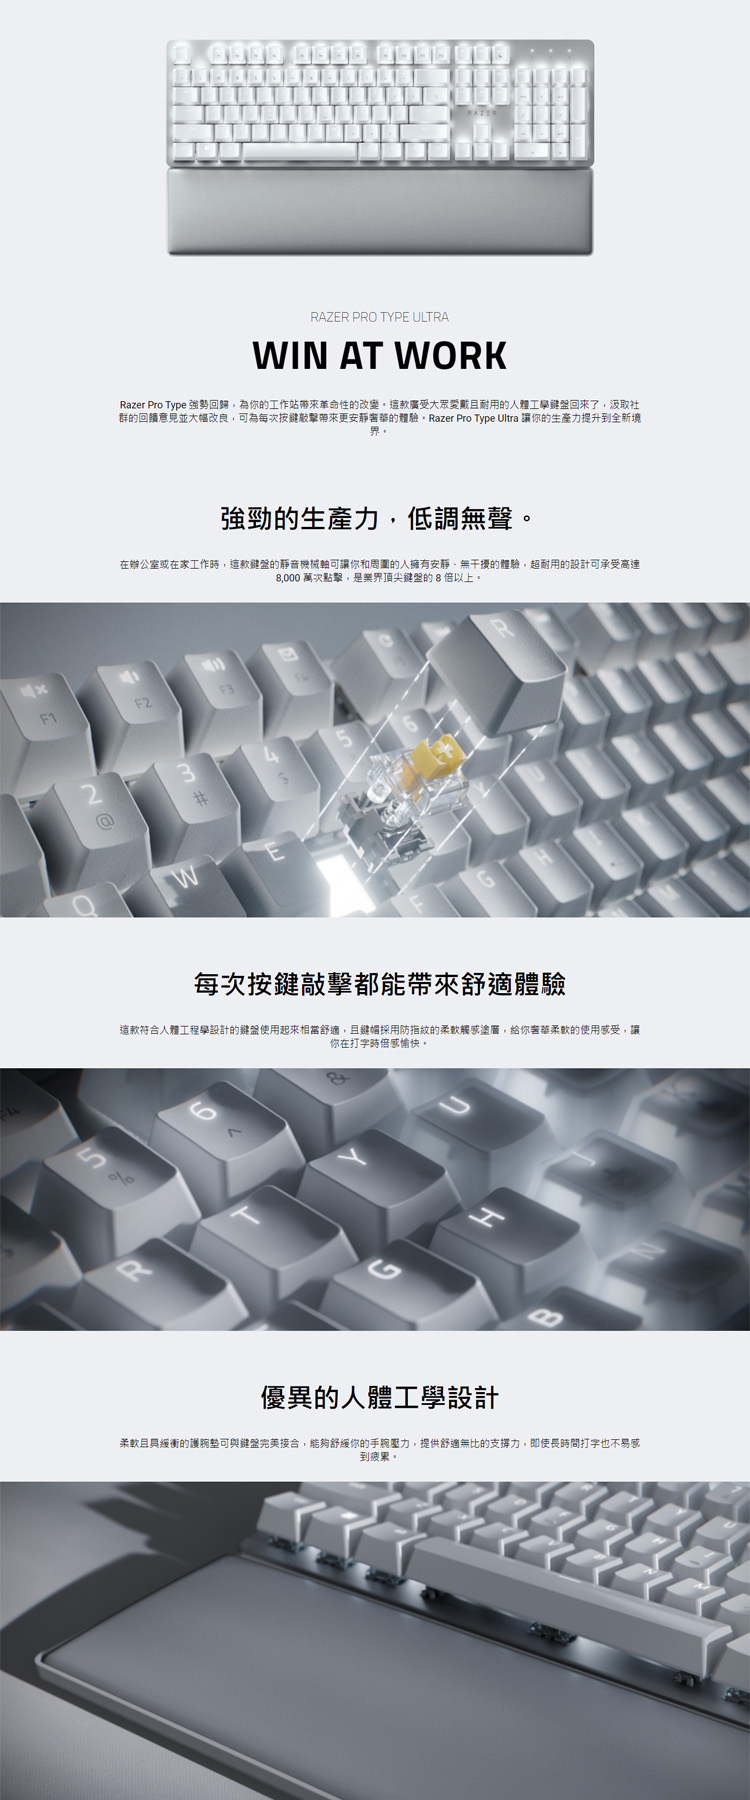 Razer 雷蛇】Pro Type Ultra 無線藍牙雙模機械鍵盤中文/白色- 三井3C